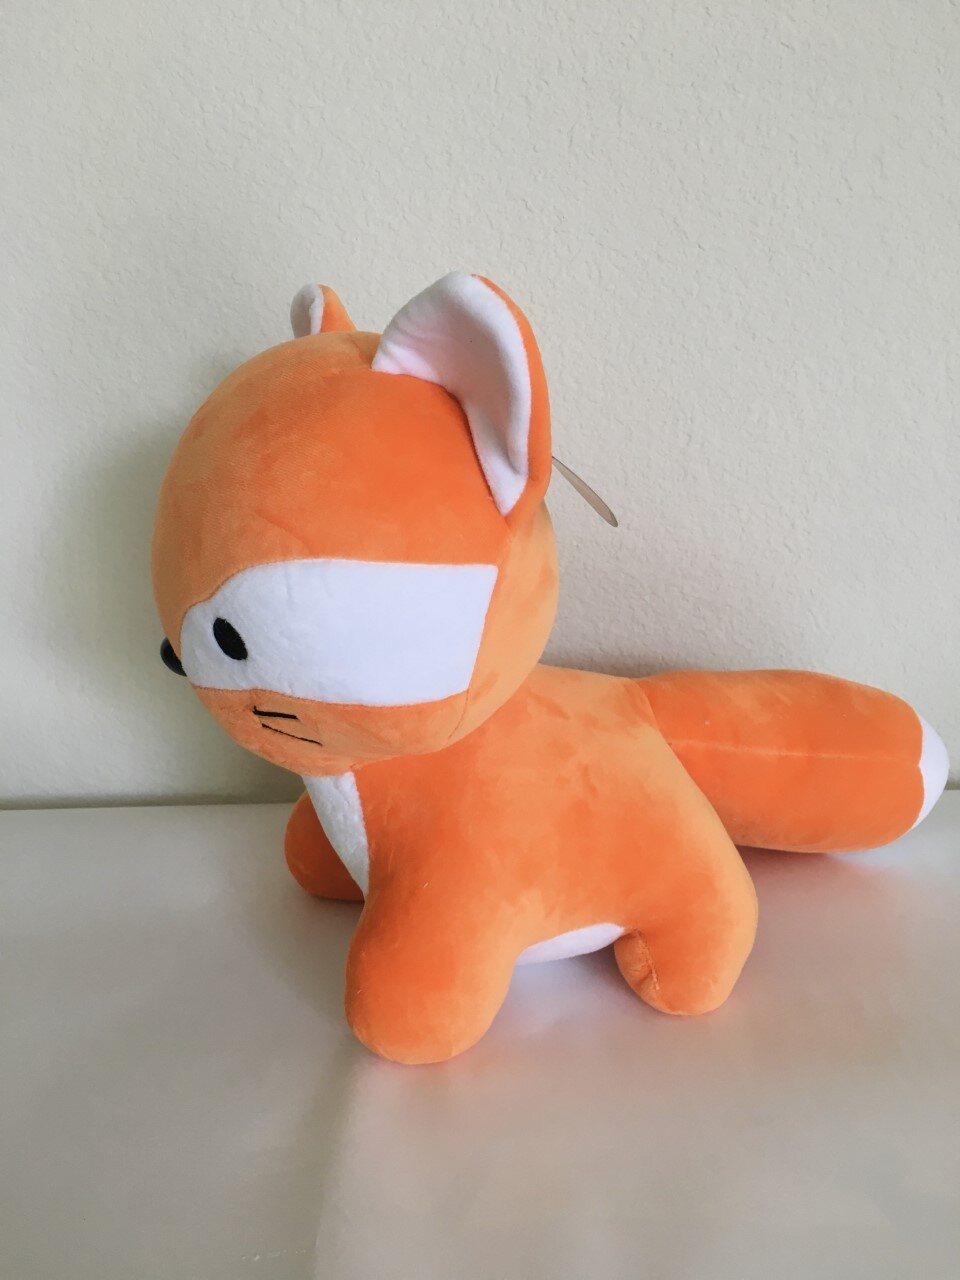 30cm Soinc Orange Tail Miles Prower Plush Toy Doll Gift Anime